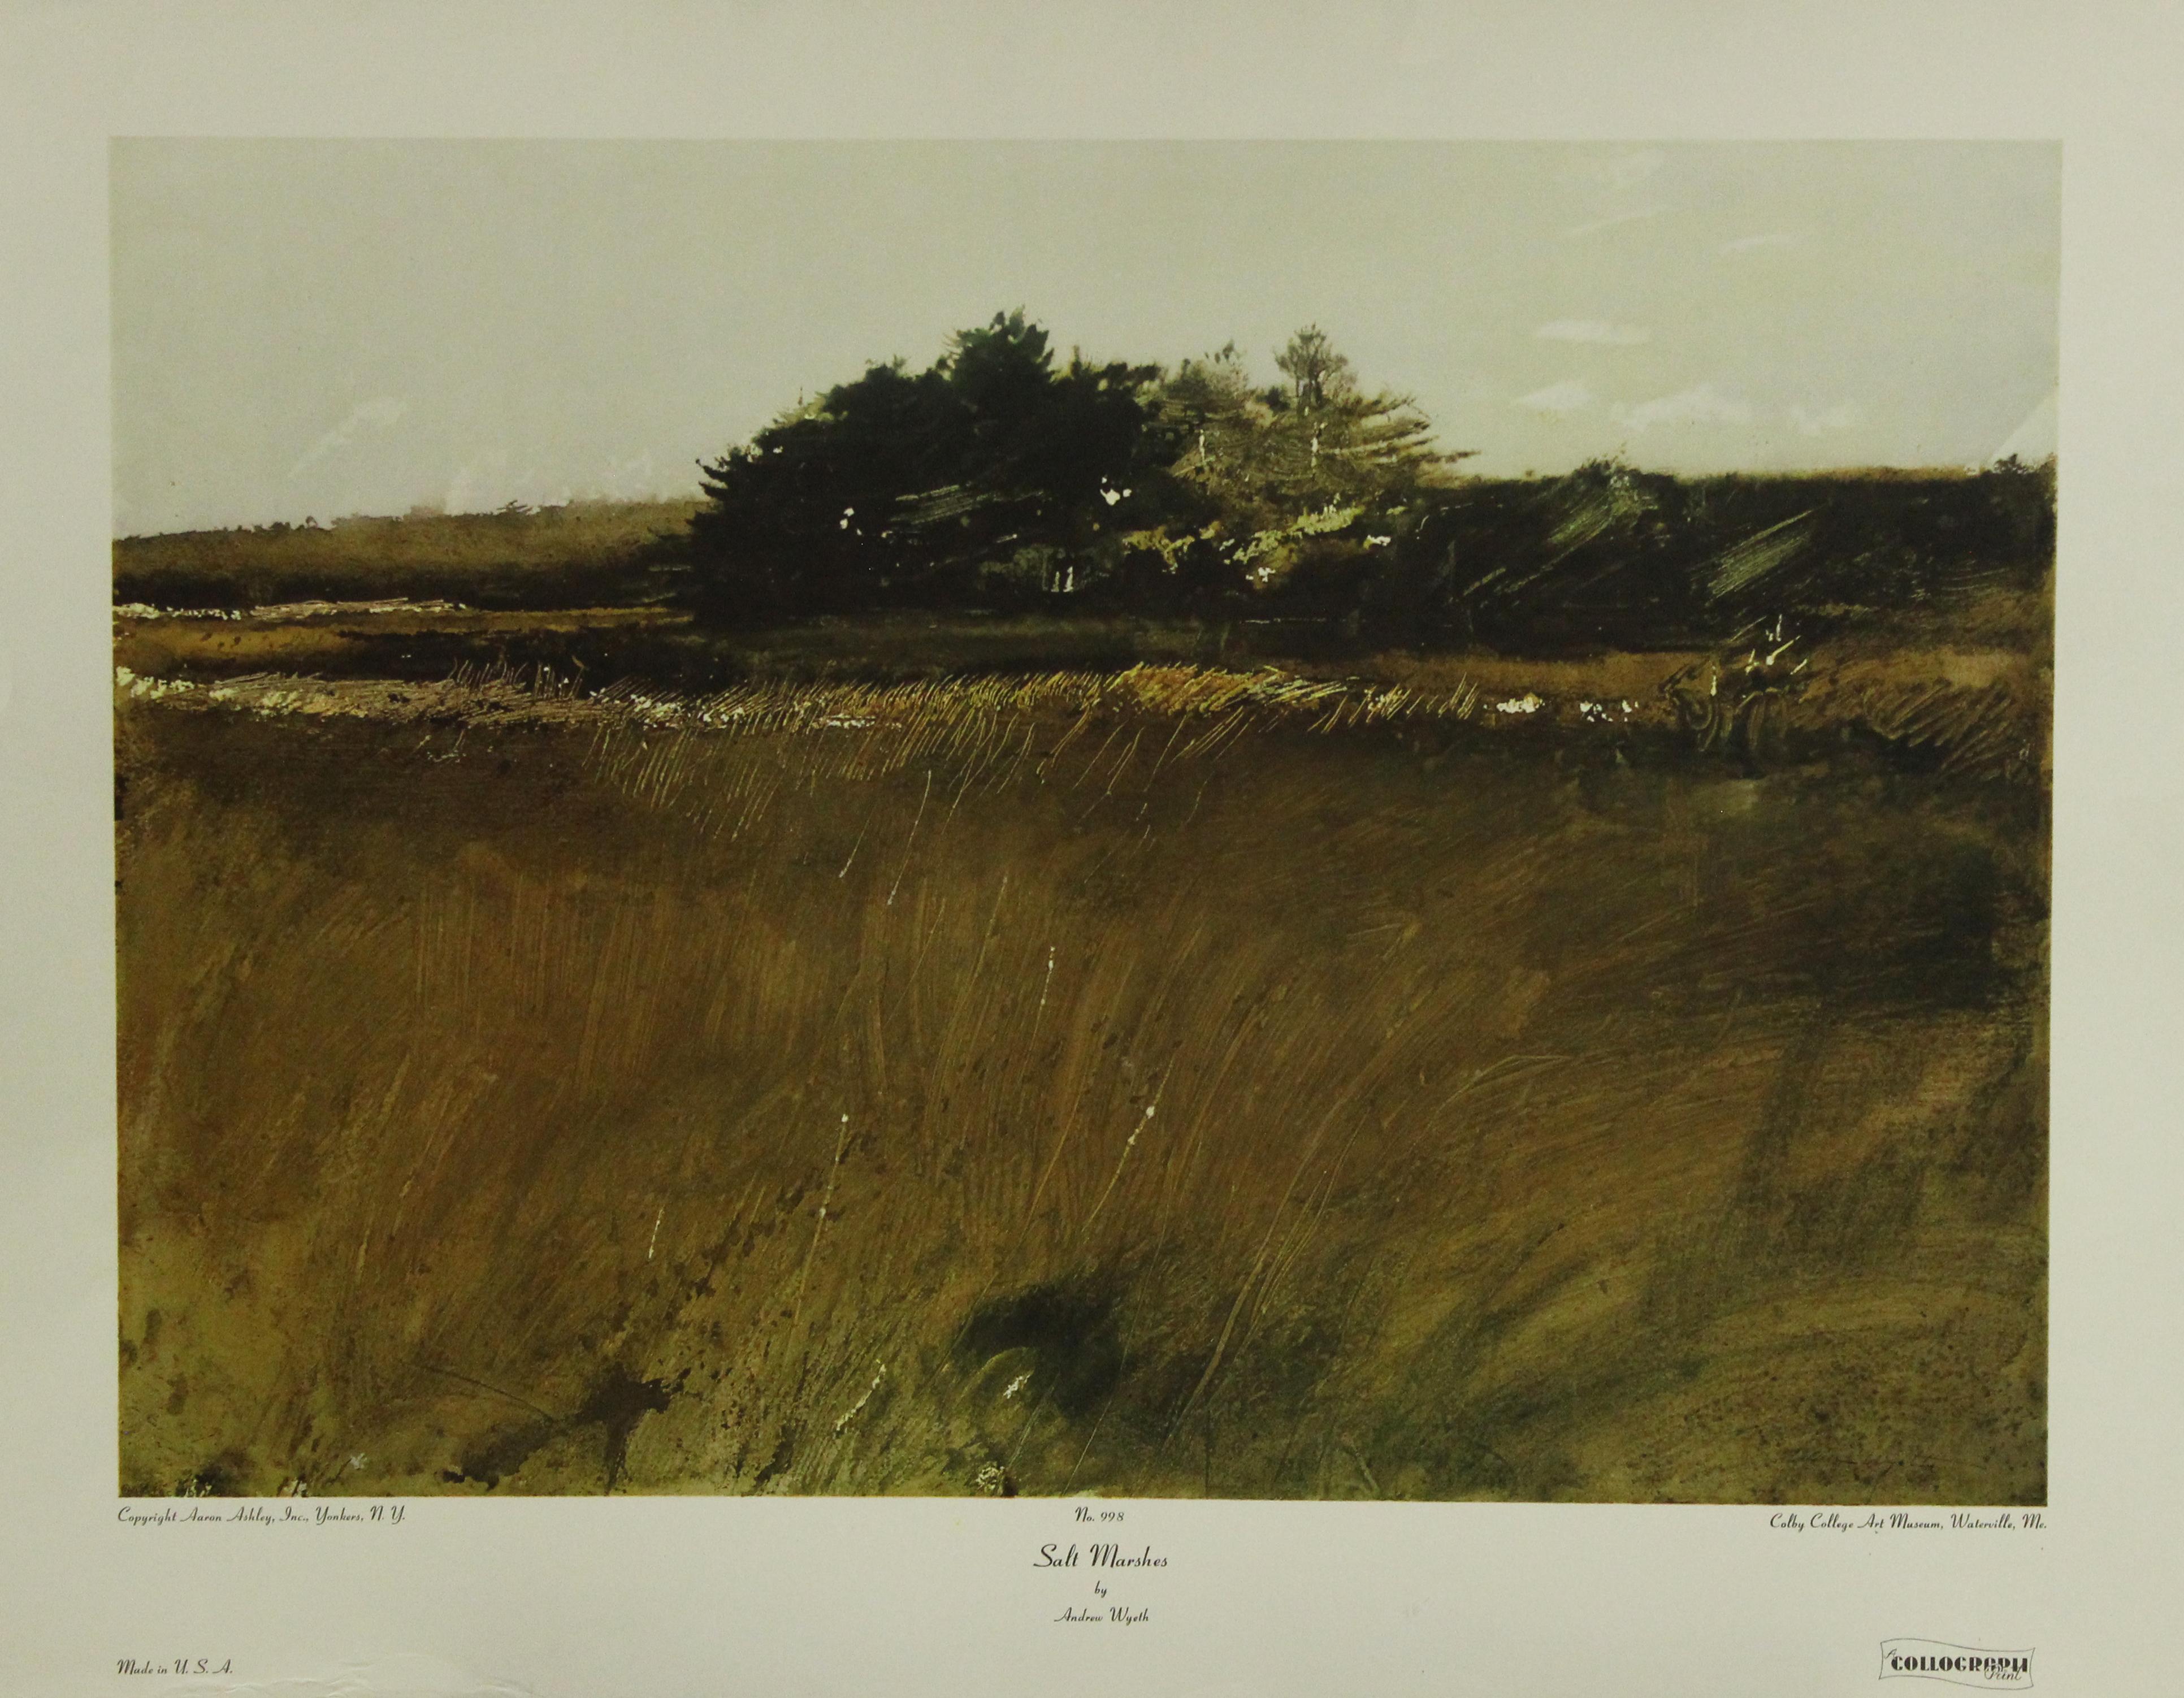 (after) Andrew Wyeth Landscape Print - Salt Marshes-Poster. Copyright Aaron Ashley, Inc. 